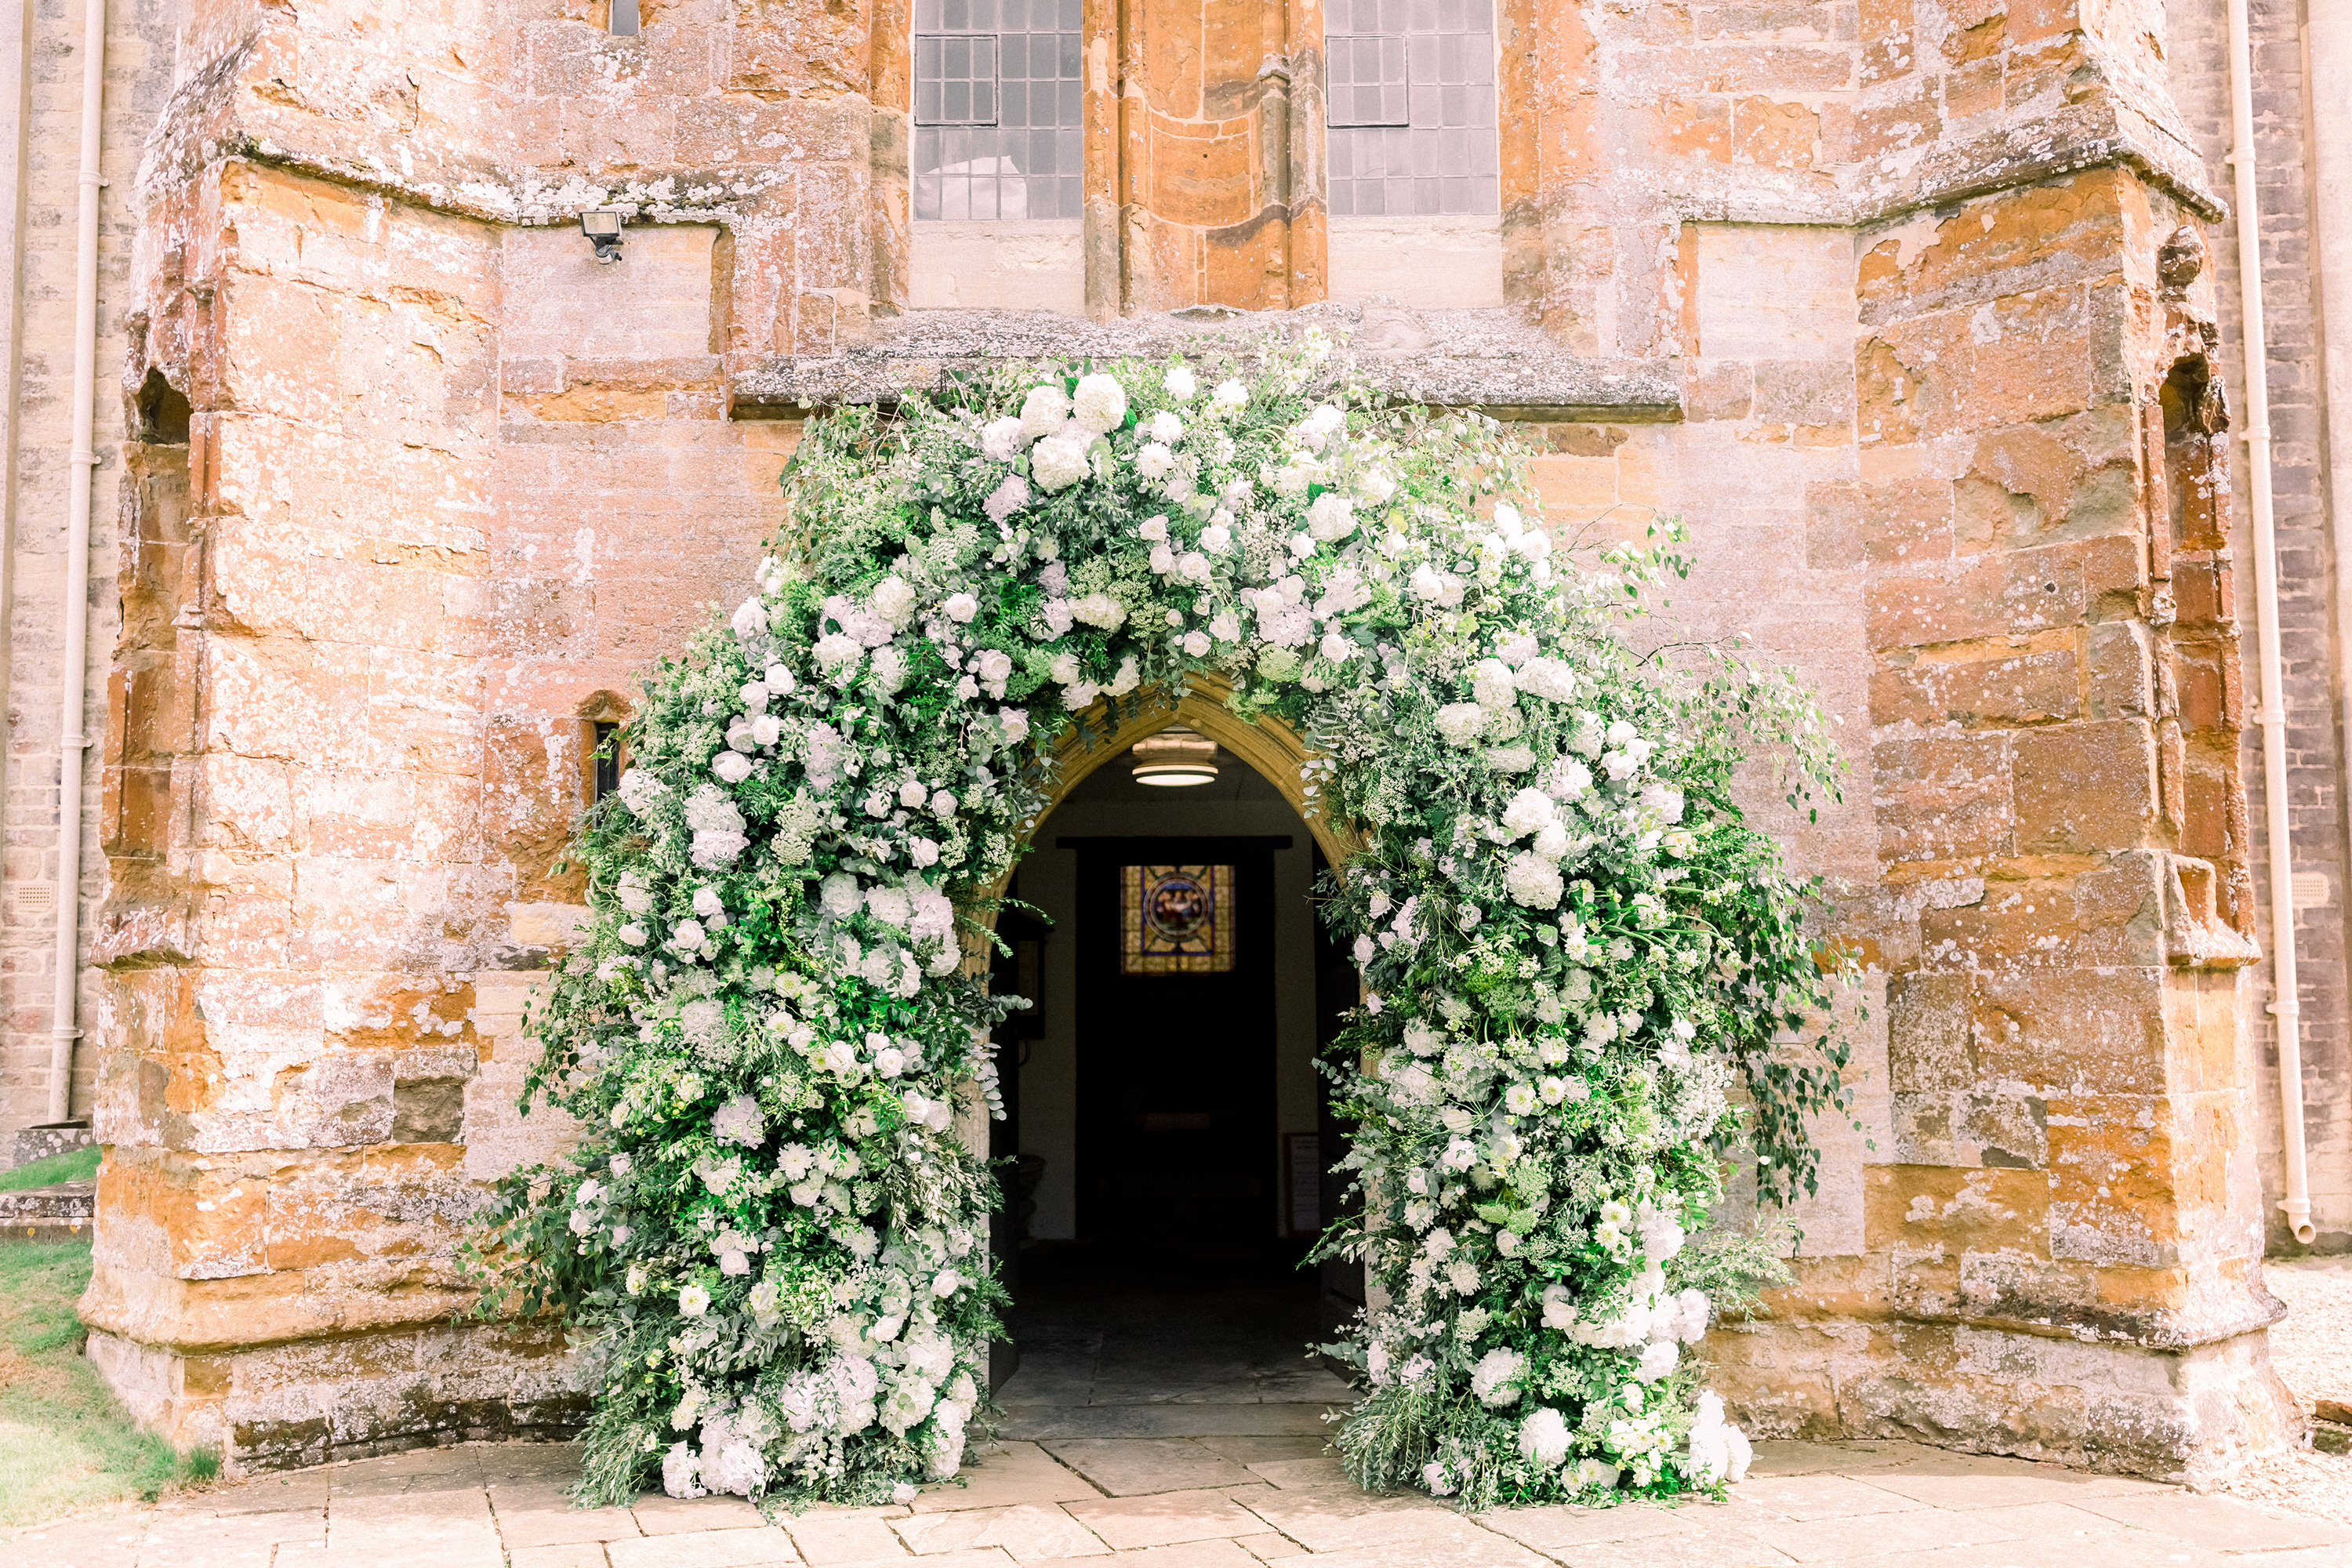 Statement floral arch at Aynhoe park Oxfordshire wedding venue